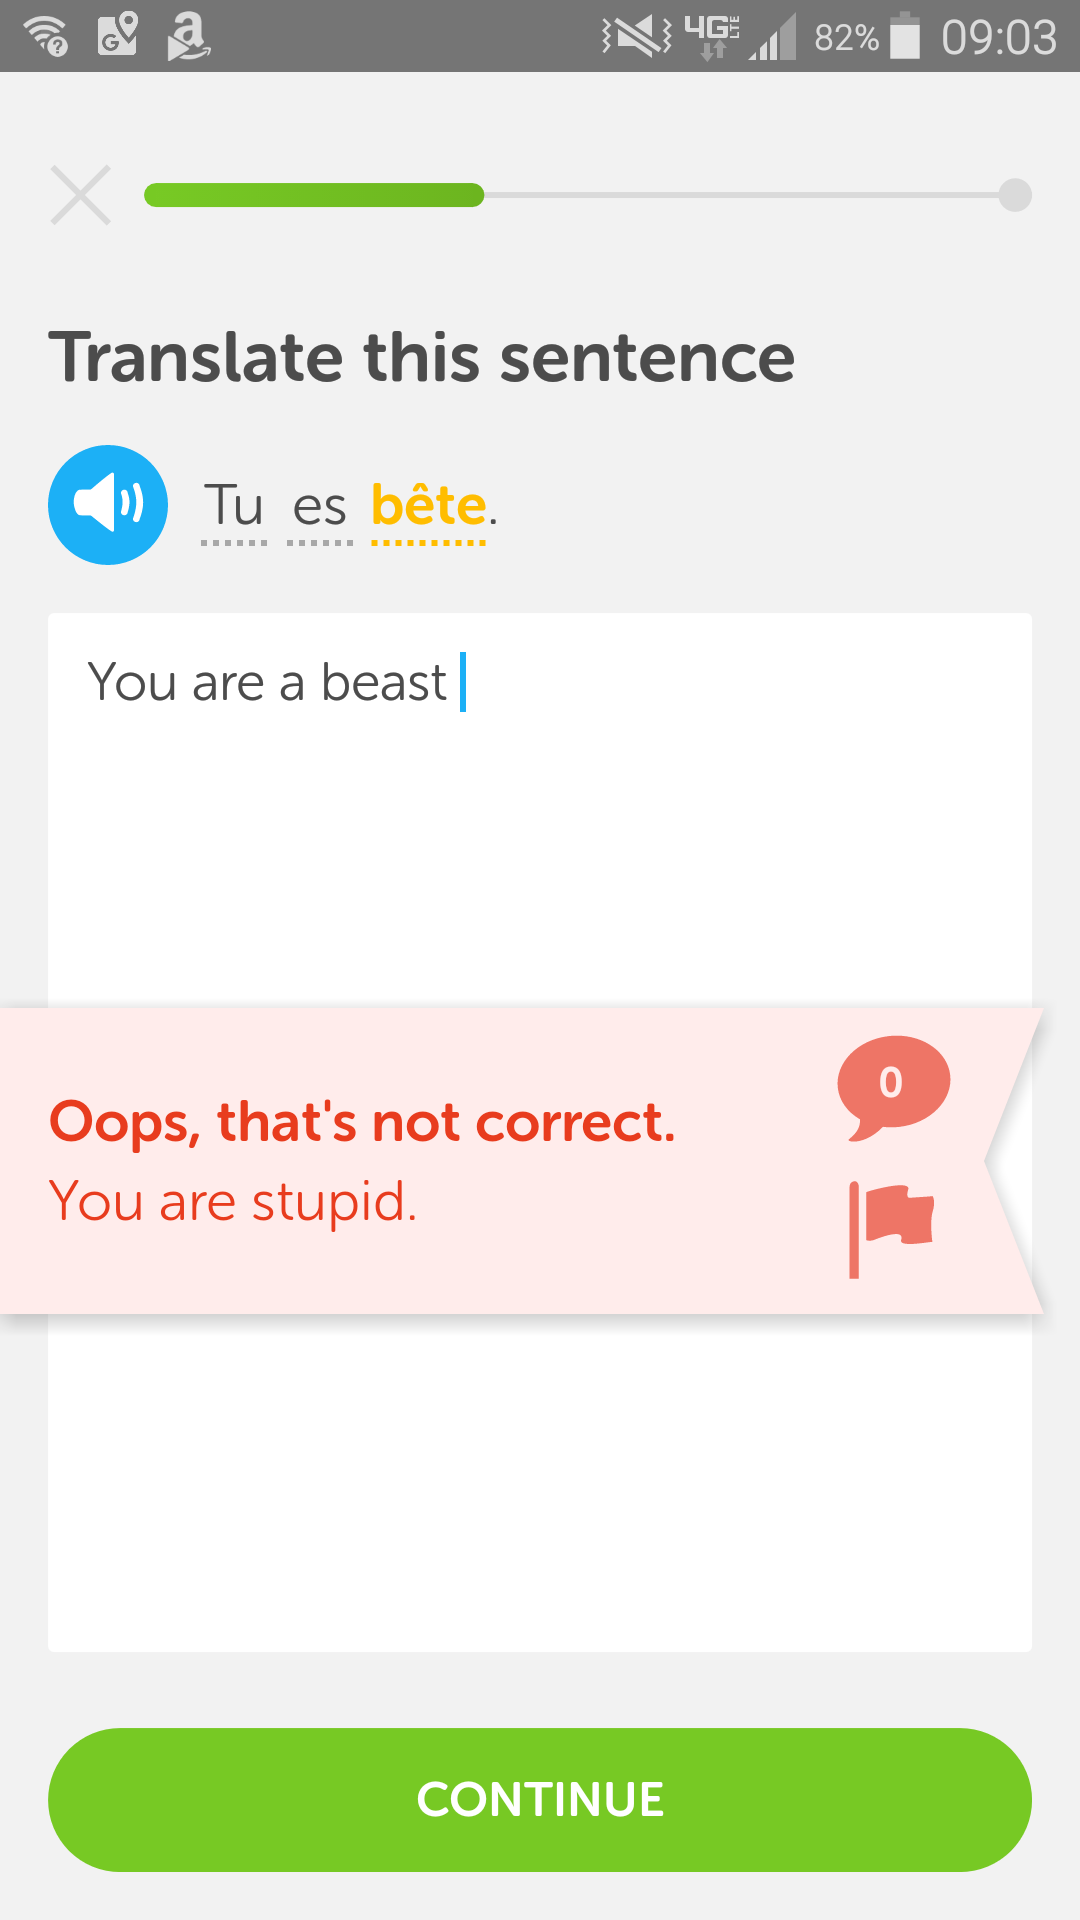 Duolingo is a bit harsh